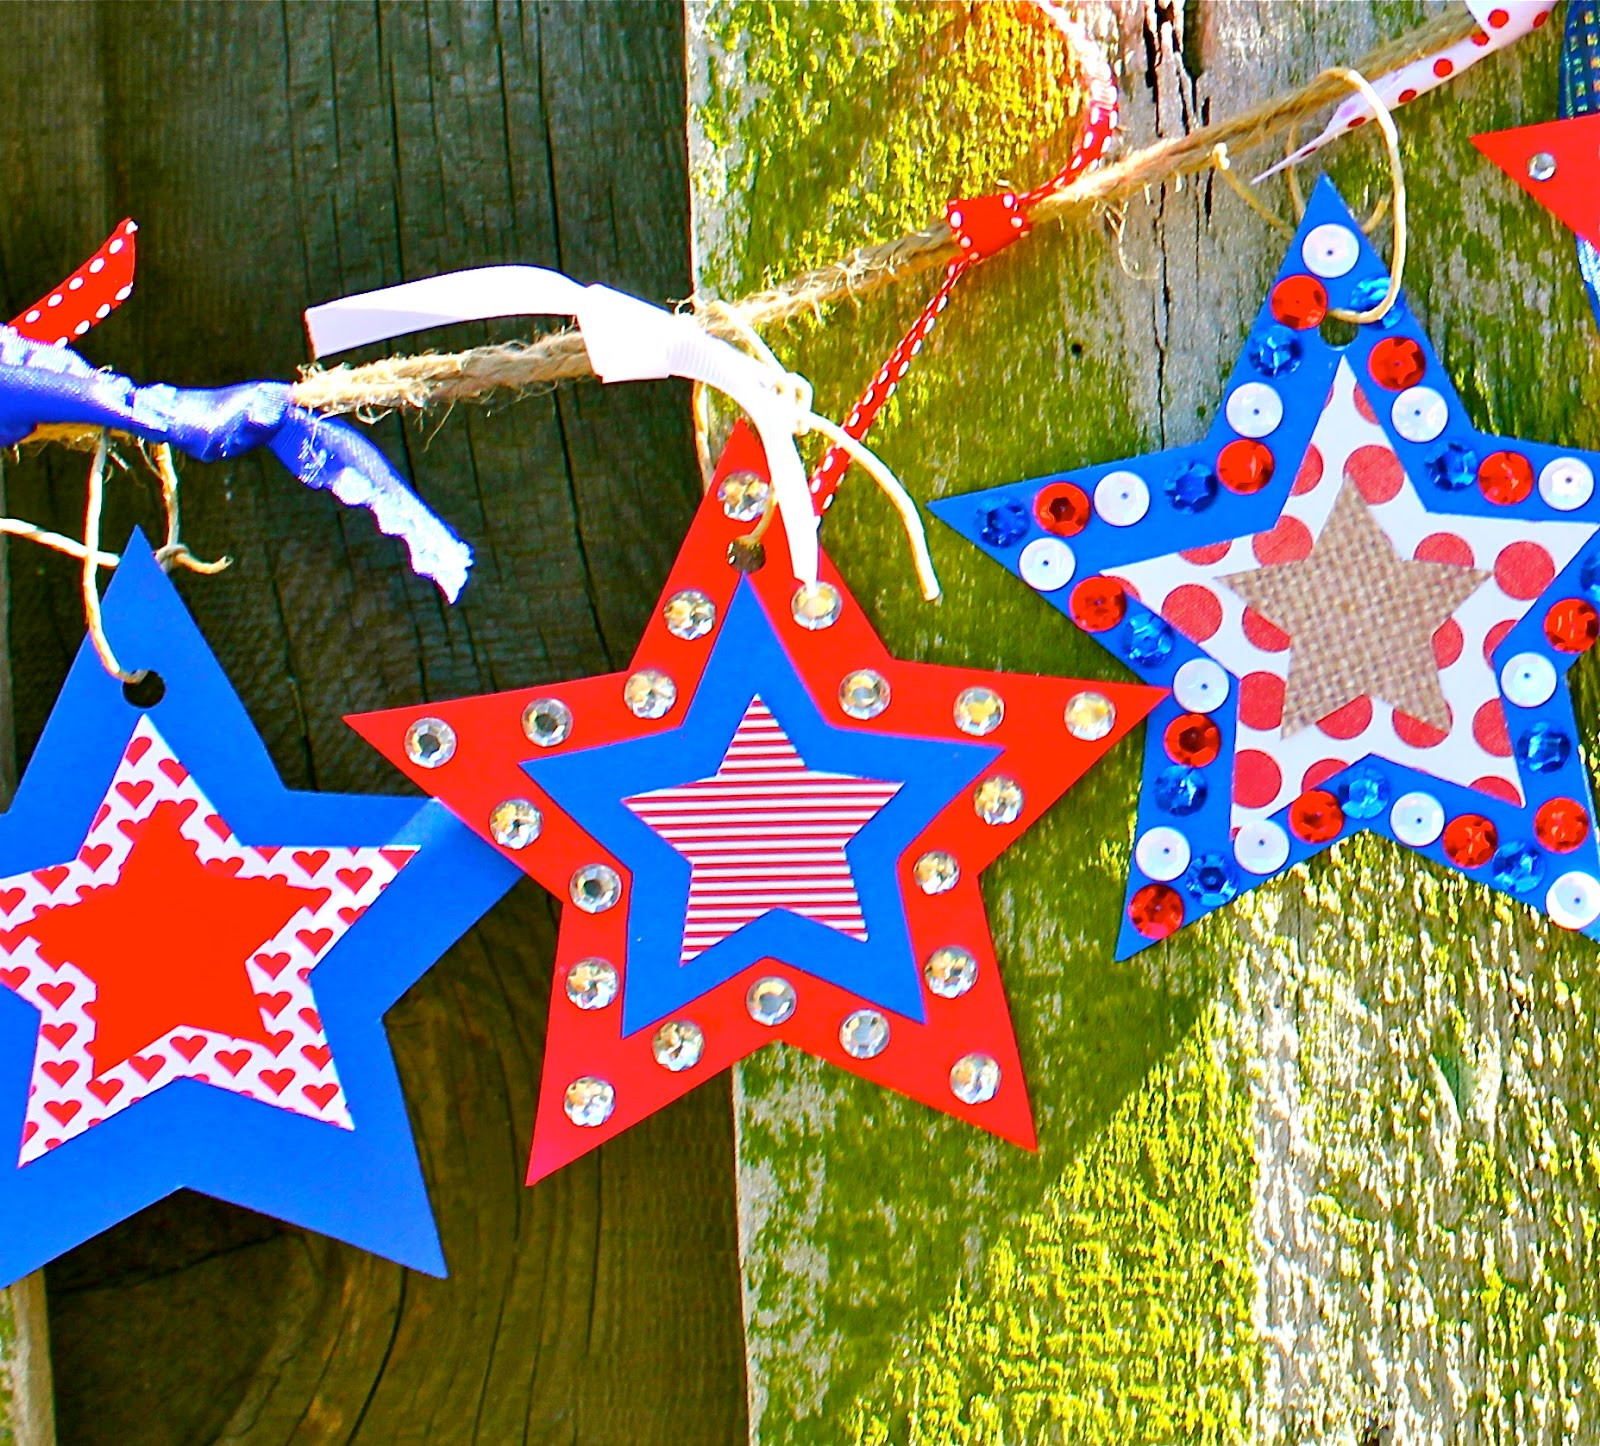 Summer Crafts For Seniors
 Smart Bottom Enterprises Patriotic Stars Banner Craft Kit